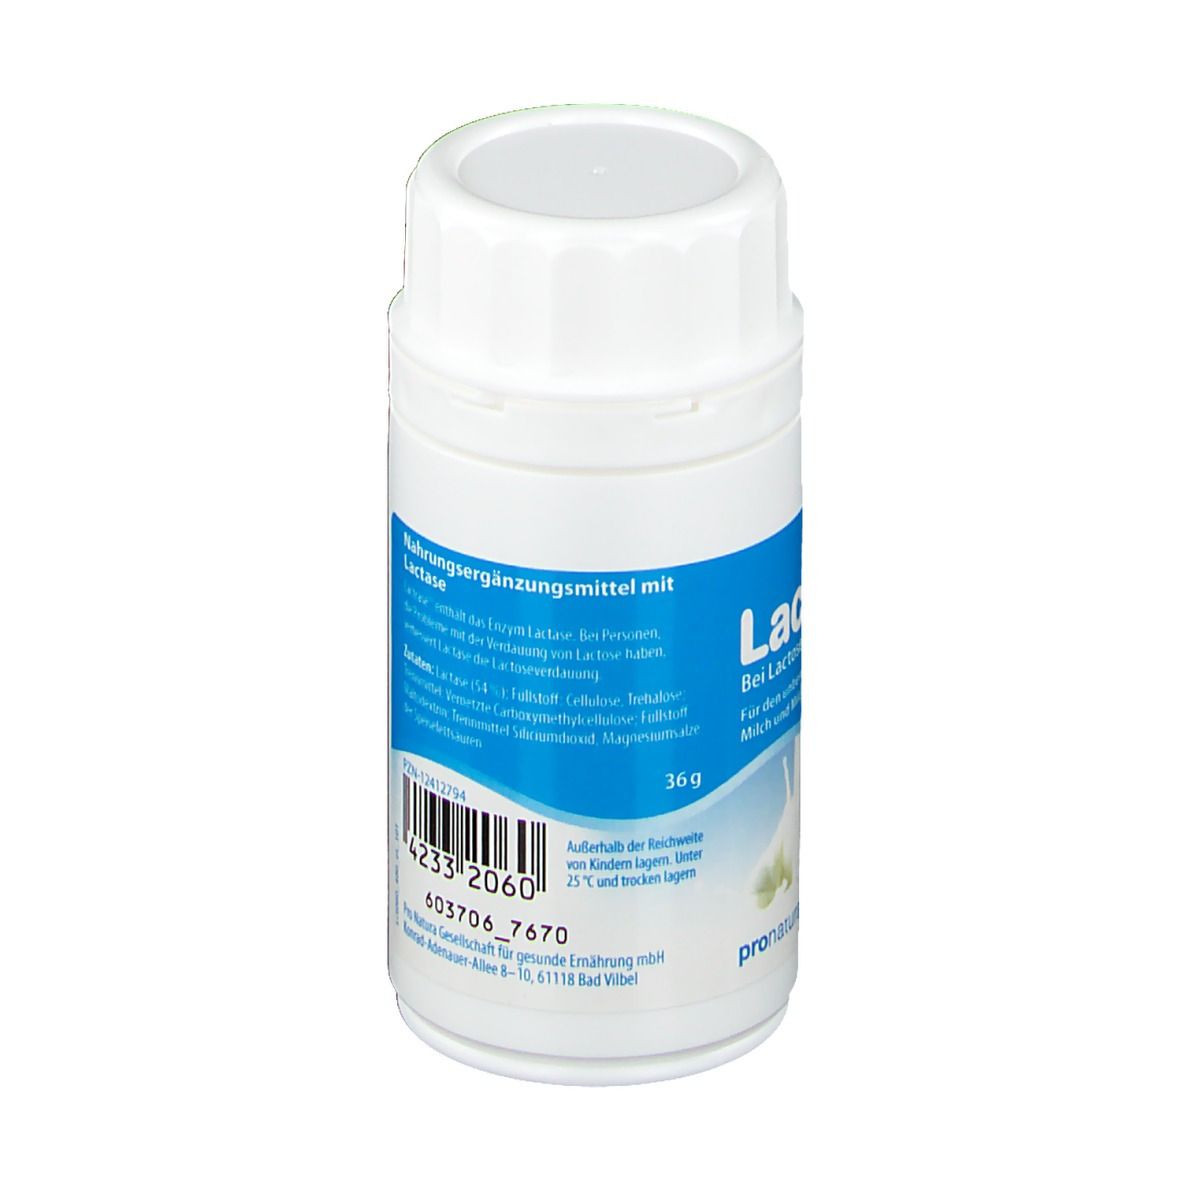 Lactrase® 6000 FCC Tabletten Klickspender Nachfüllpack